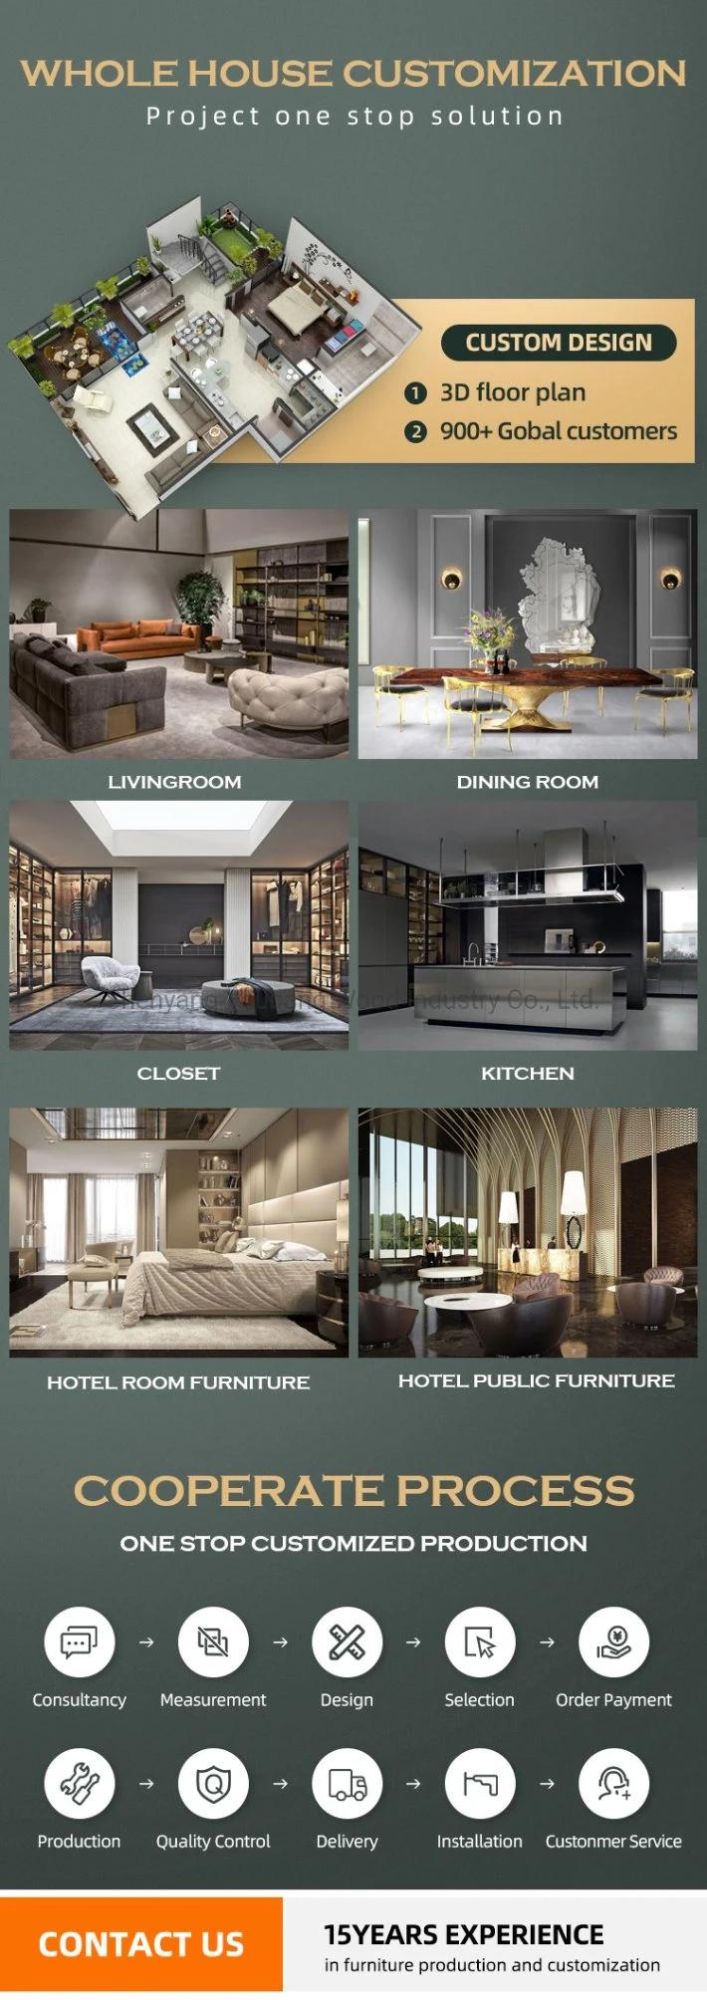 Interior Design Furnishing Project Full House Furniture Suit Bedroom Living Room Dining Room Furniture Sets